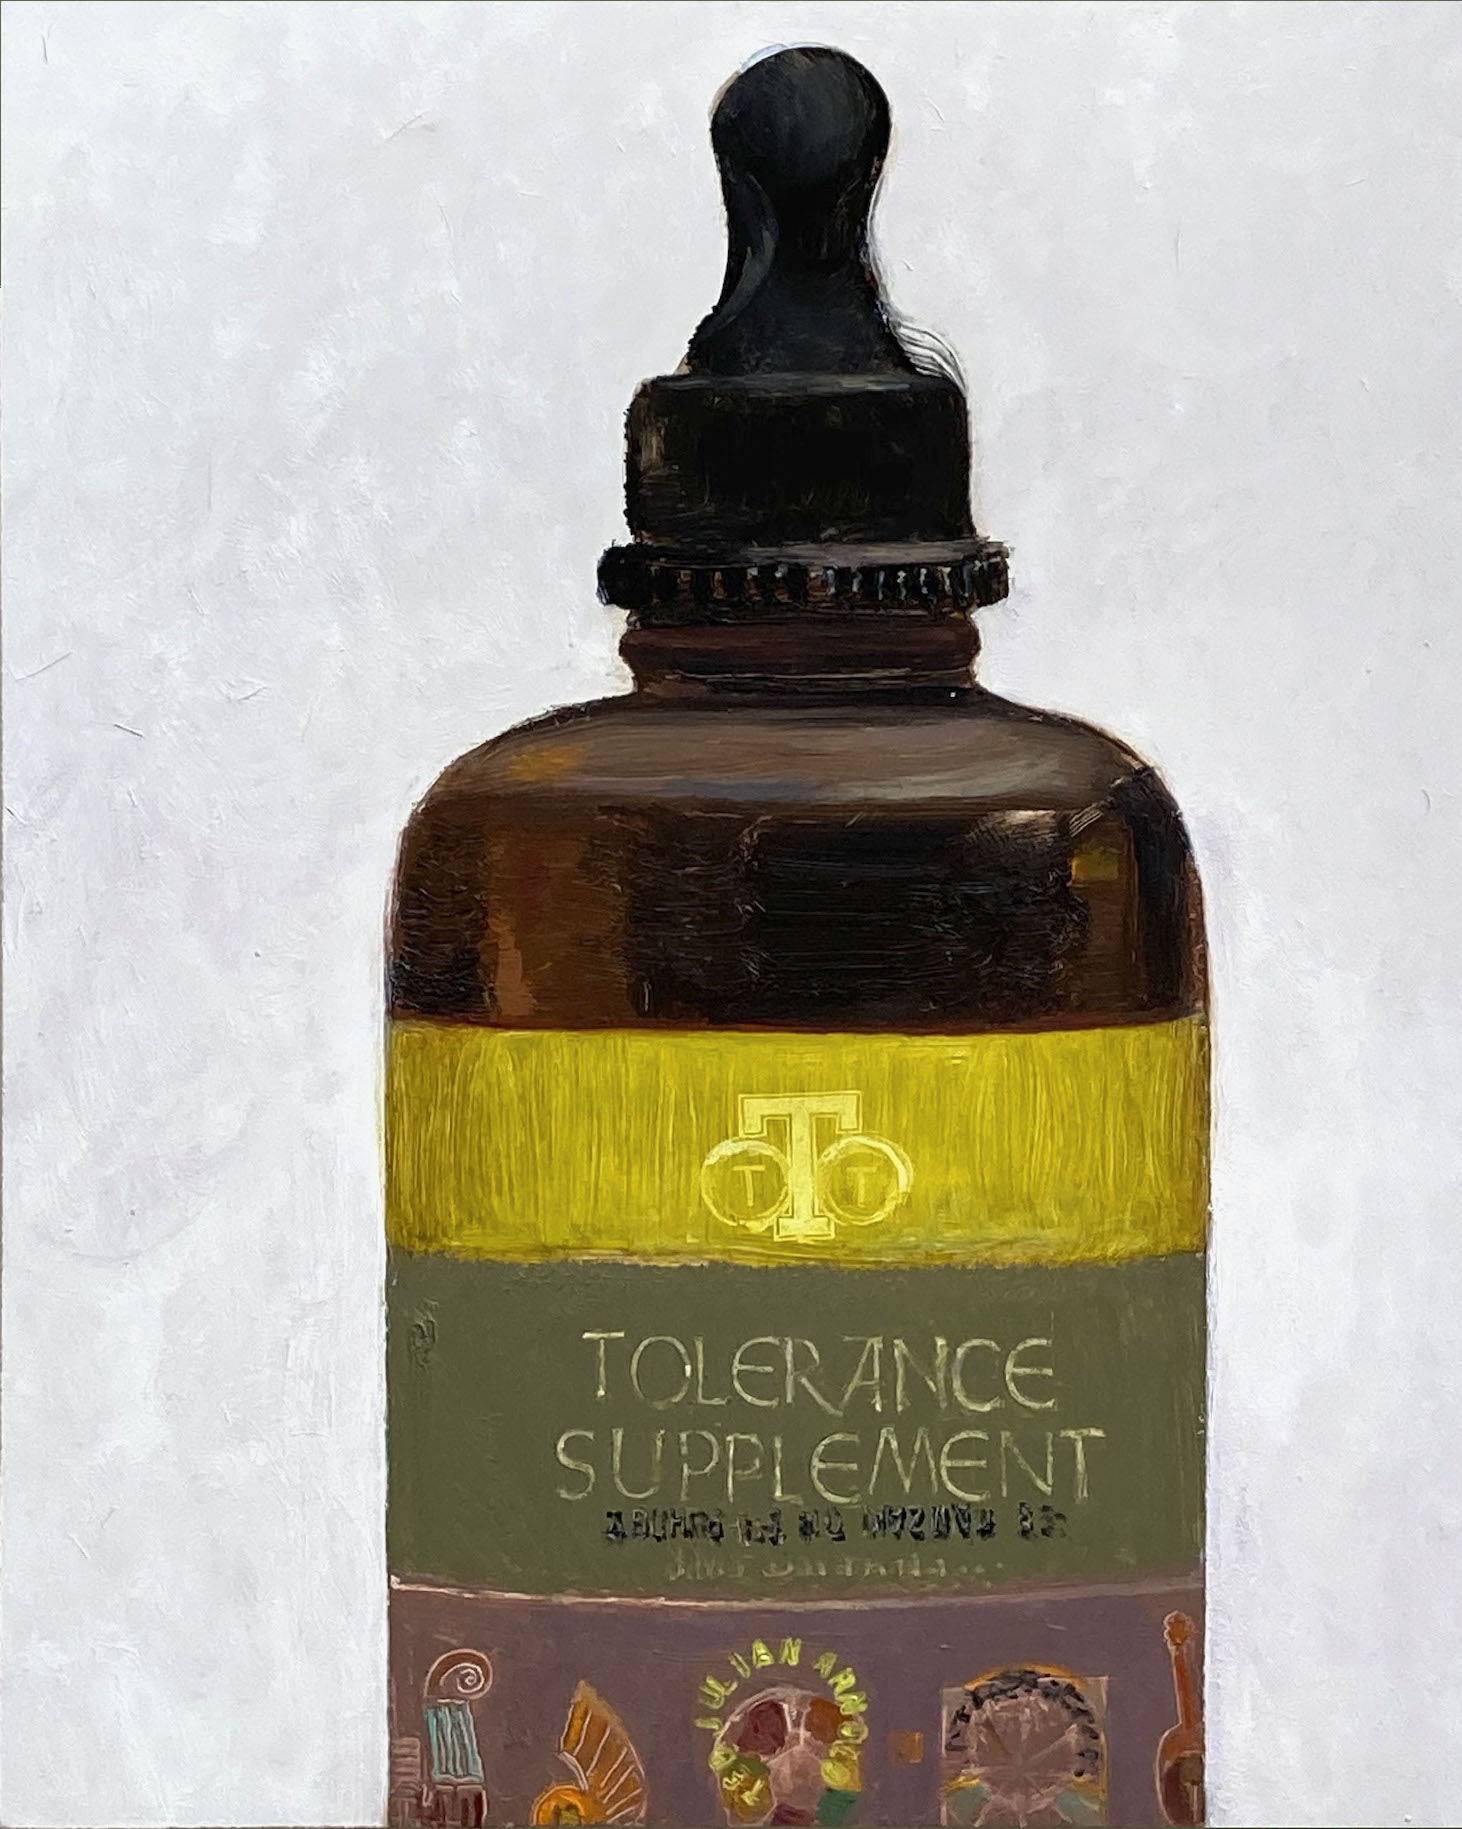 Tolerance Supplement